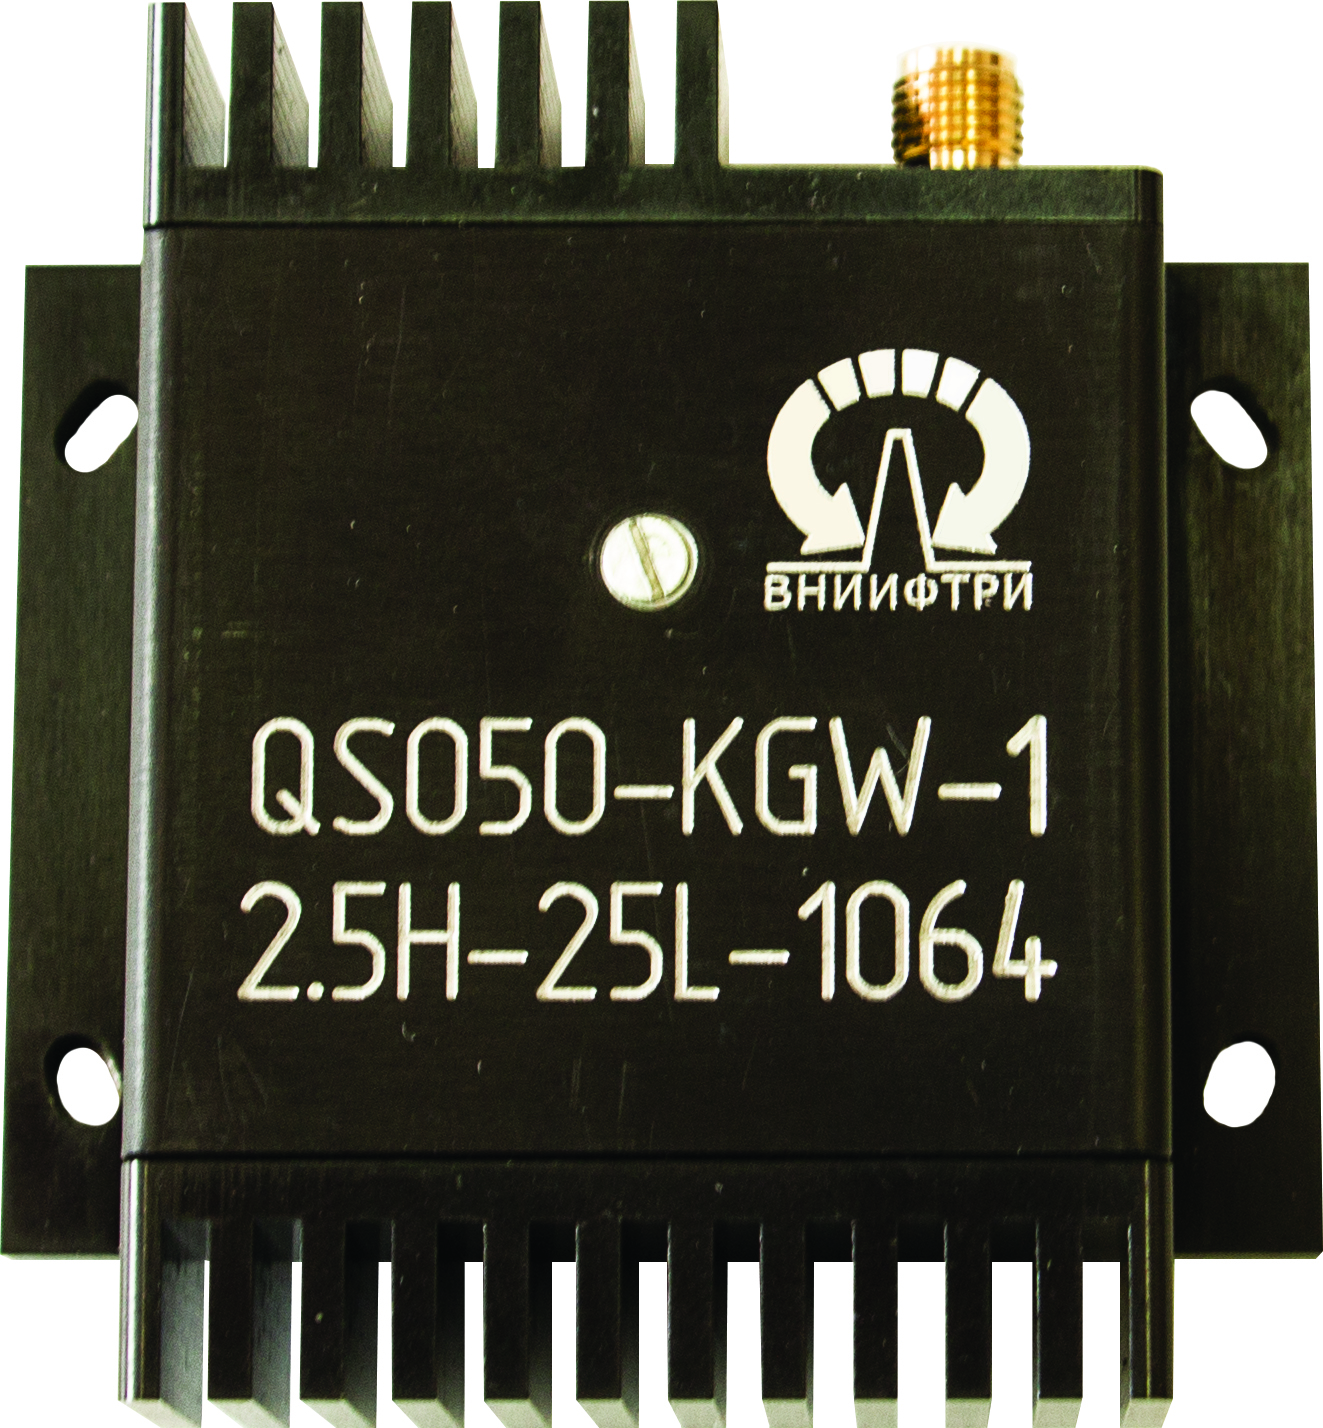 Acoustooptical modulator for high-power radiation (AOM) KGW-1